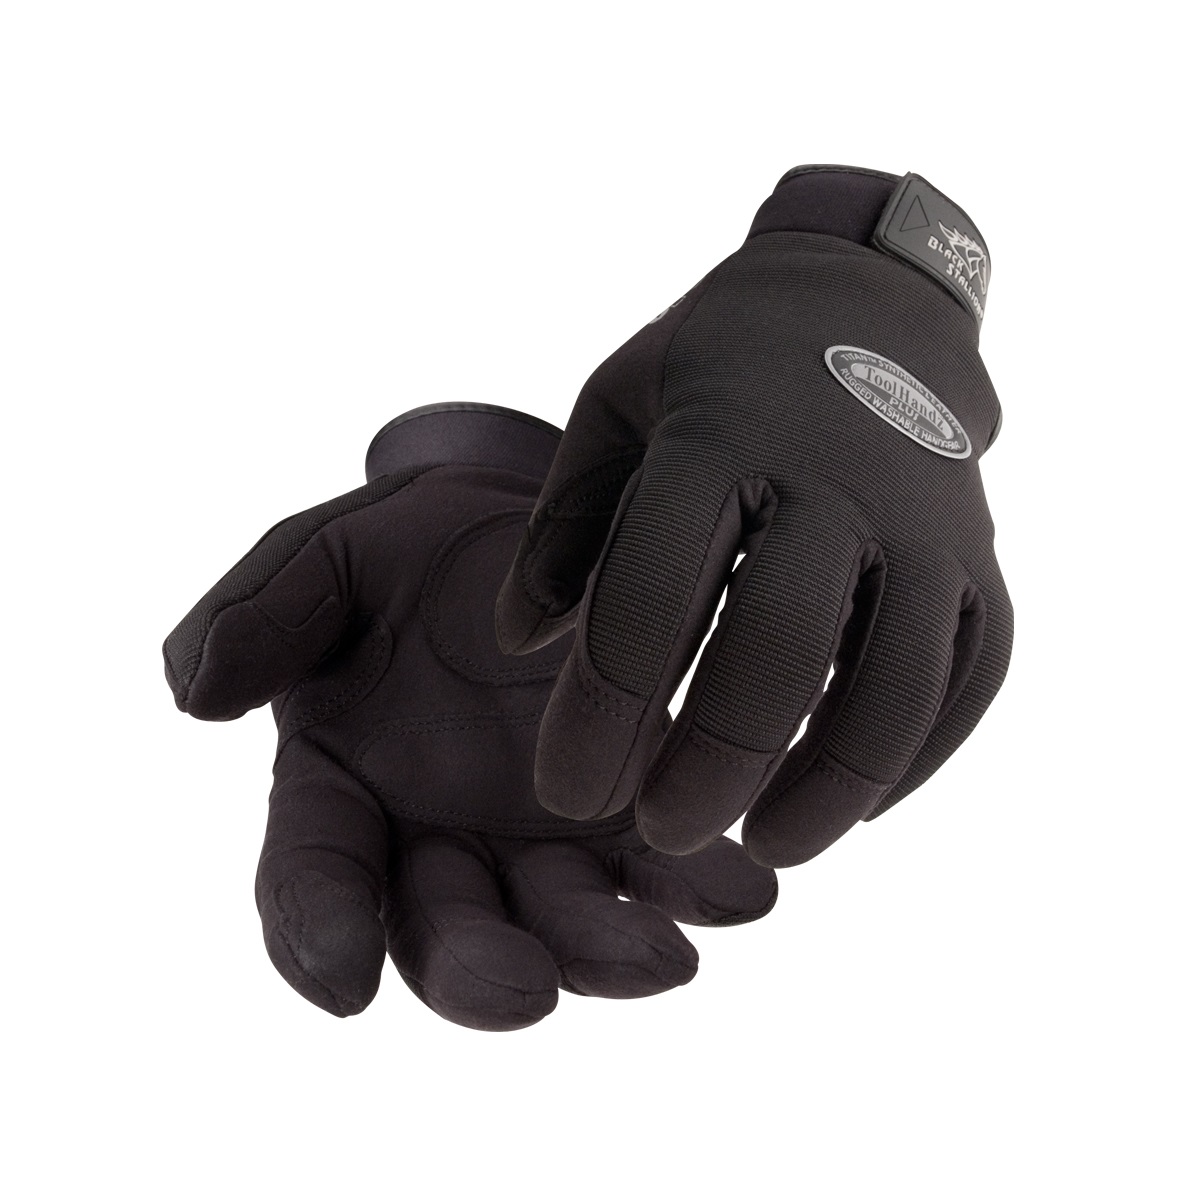 ToolHandz® Plus Original Mechanics Glove - Spill Control